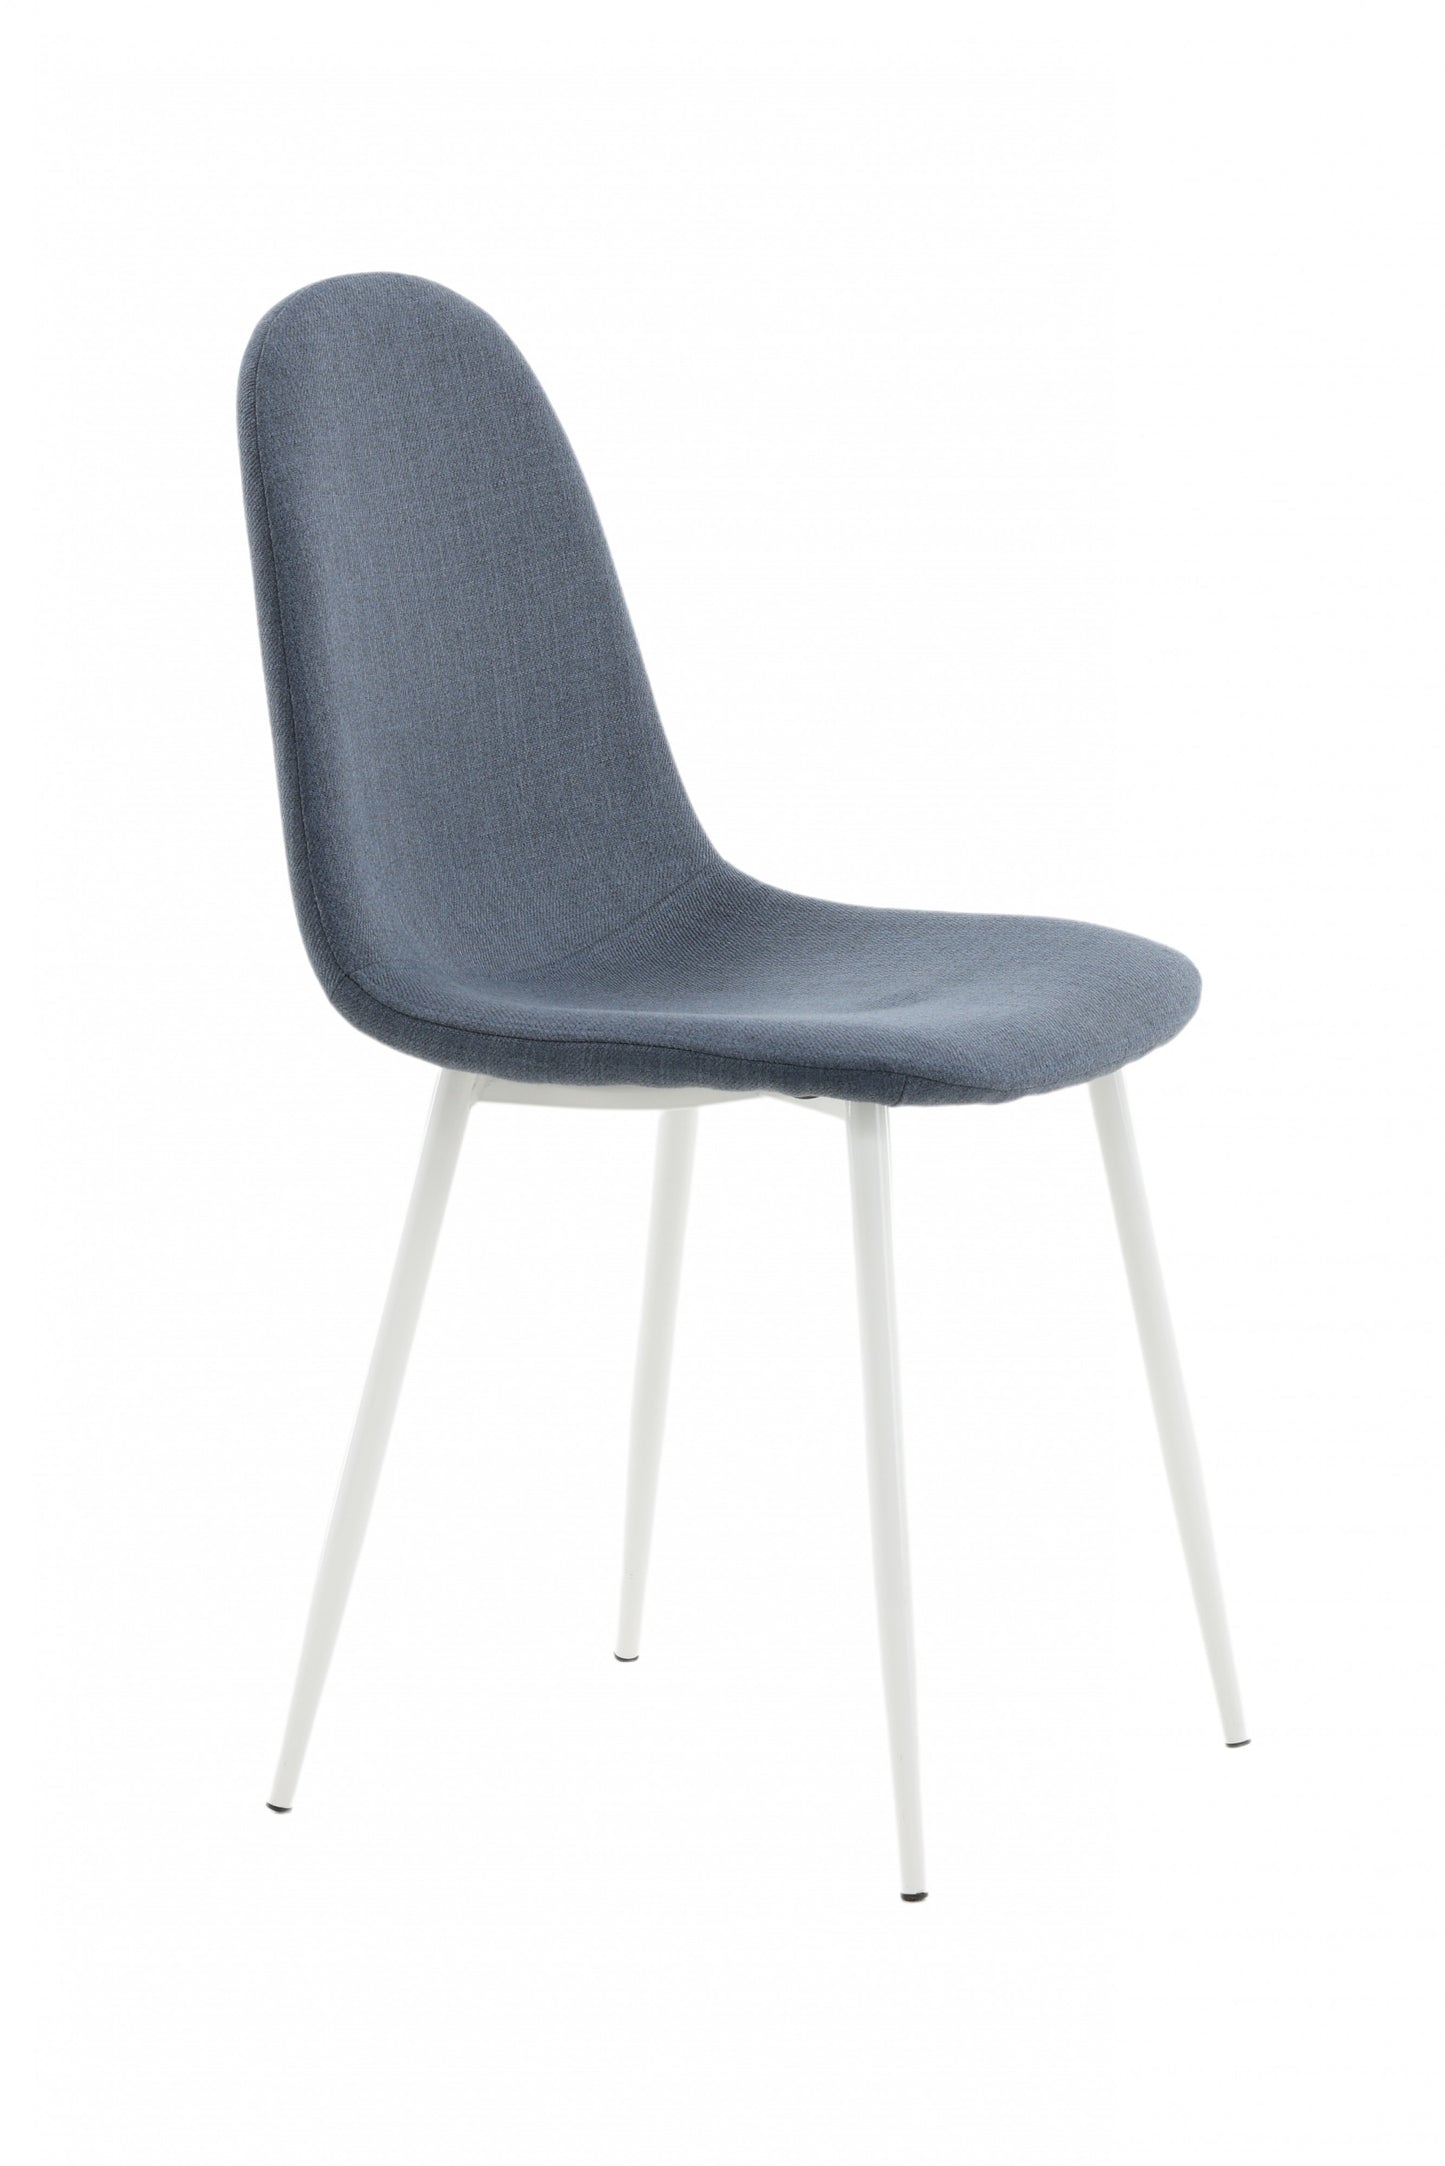 Polar Spisebordsstol - Hvide ben - Blåt stof